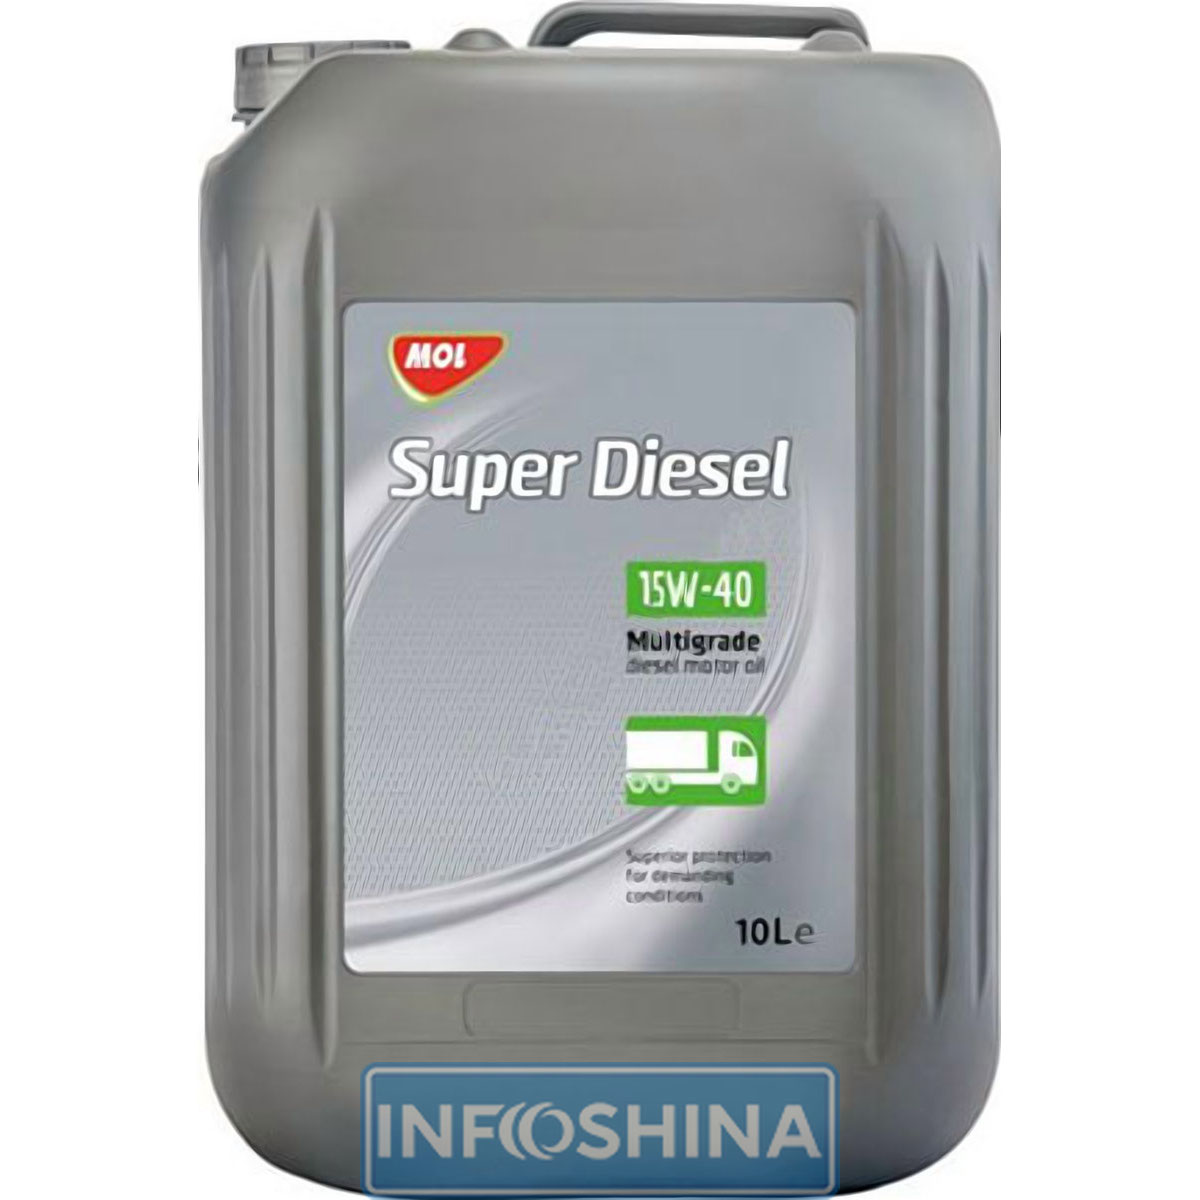 MOL Super Diesel 15W-40